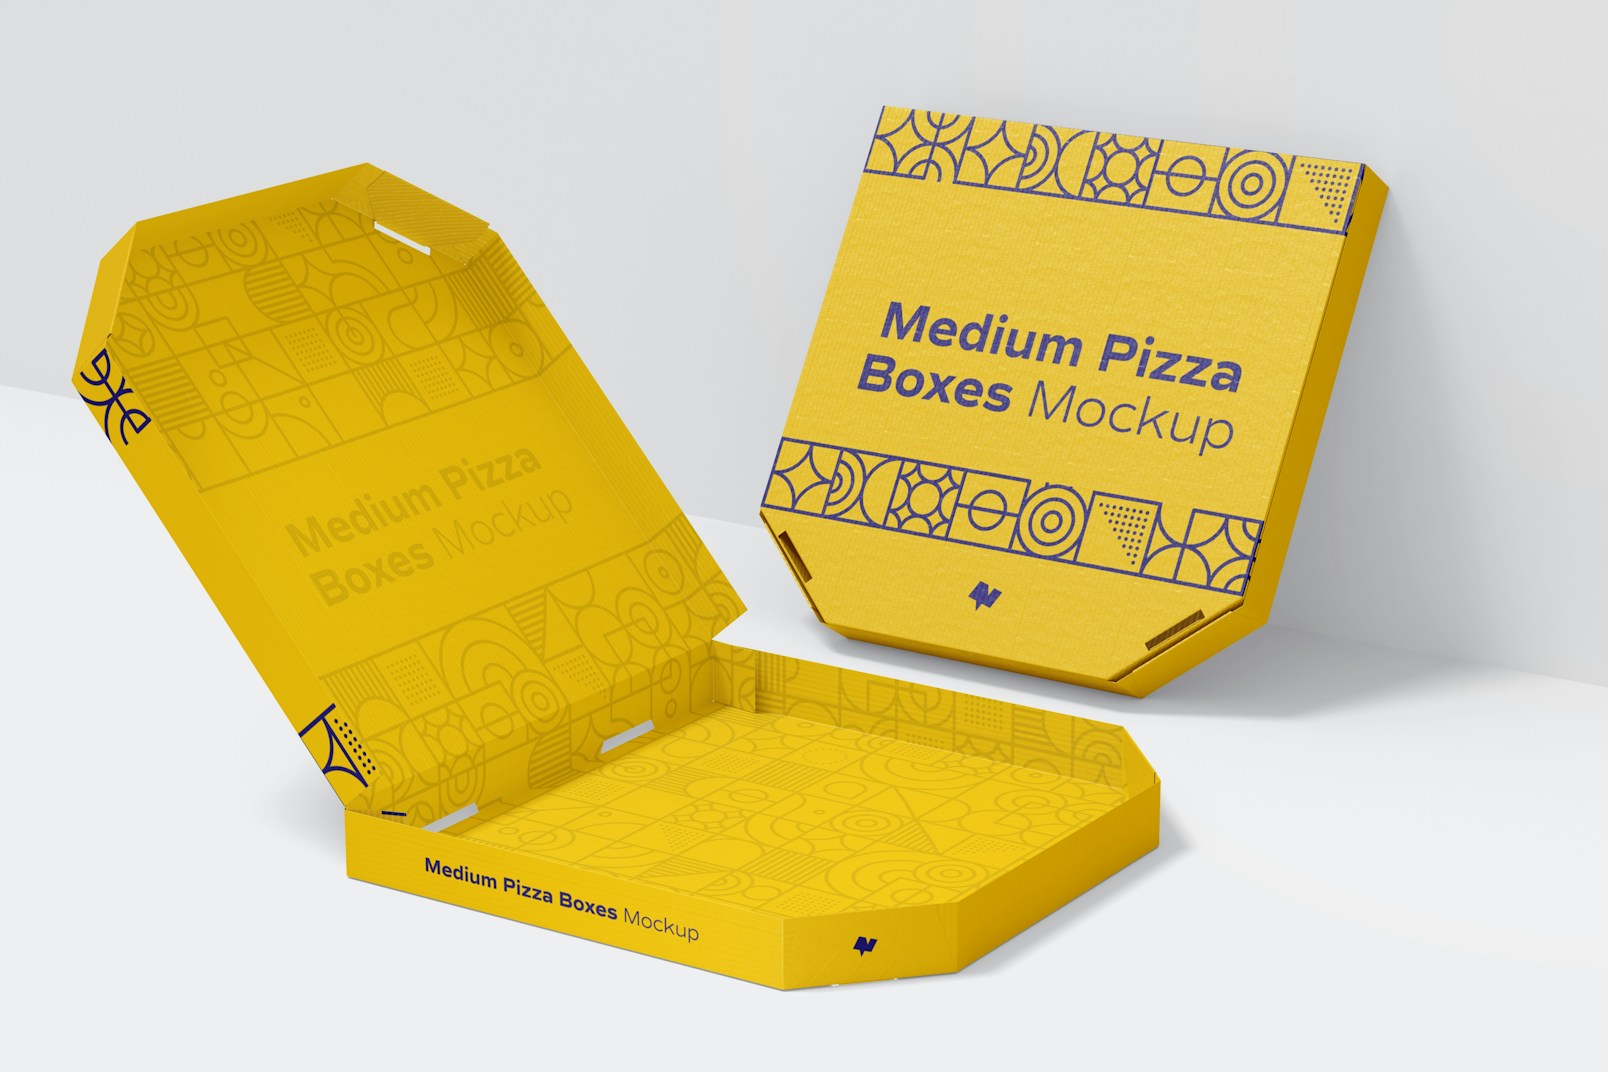 Medium Pizza Box Mockup, Perspective View